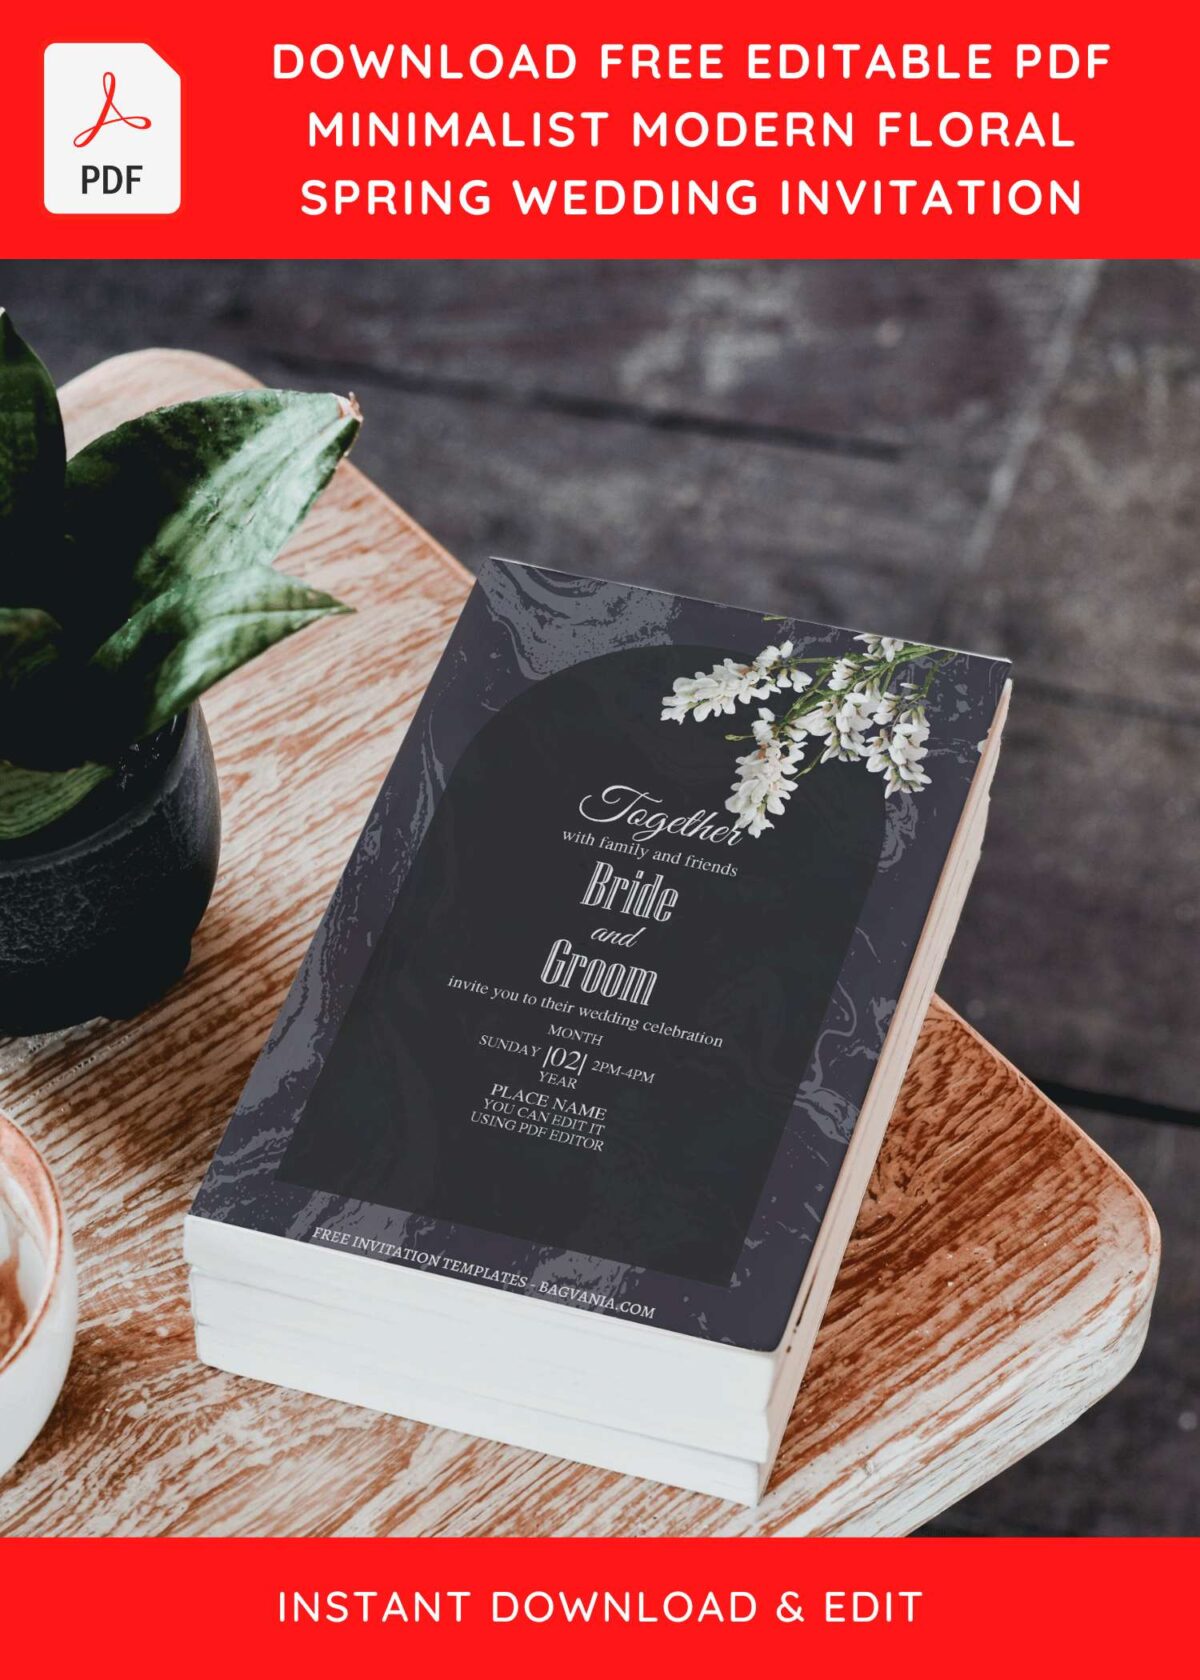 (Free Editable PDF) Luxury Black Marble Floral Wedding Invitation Templates with enchanting Cherry Blossom